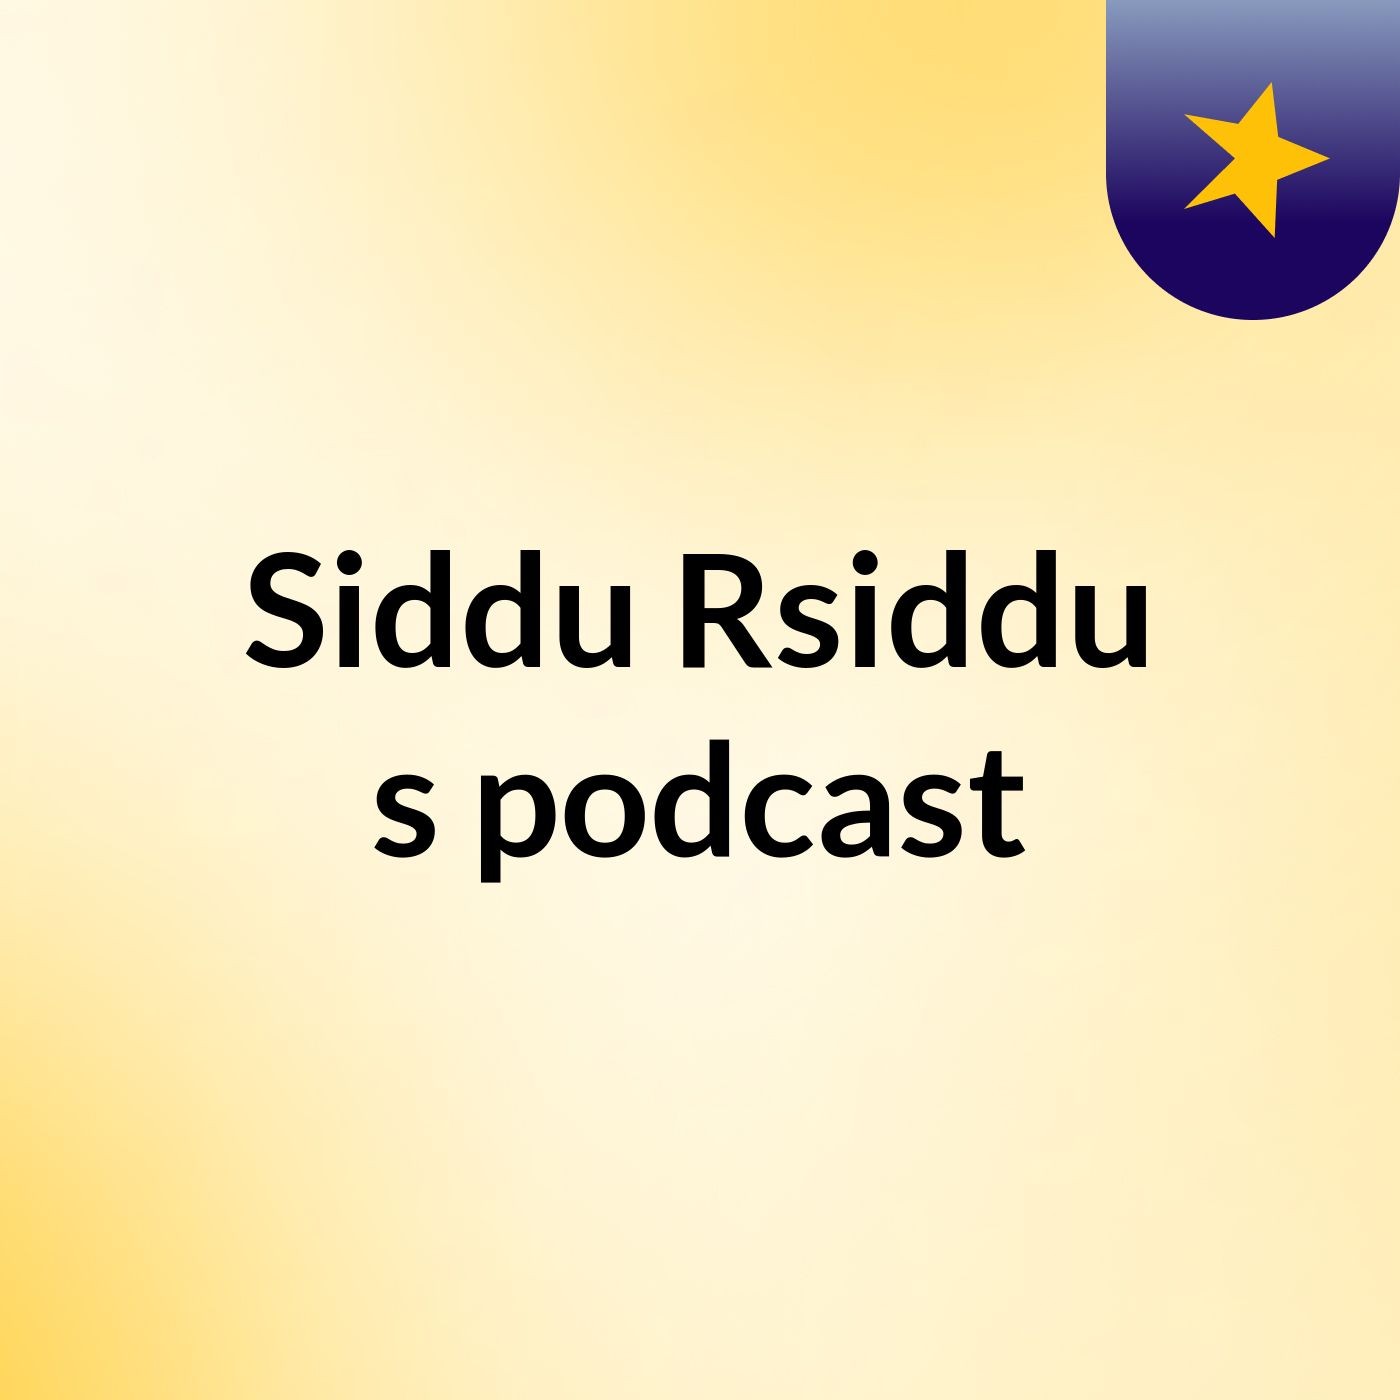 Siddu Rsiddu's podcast